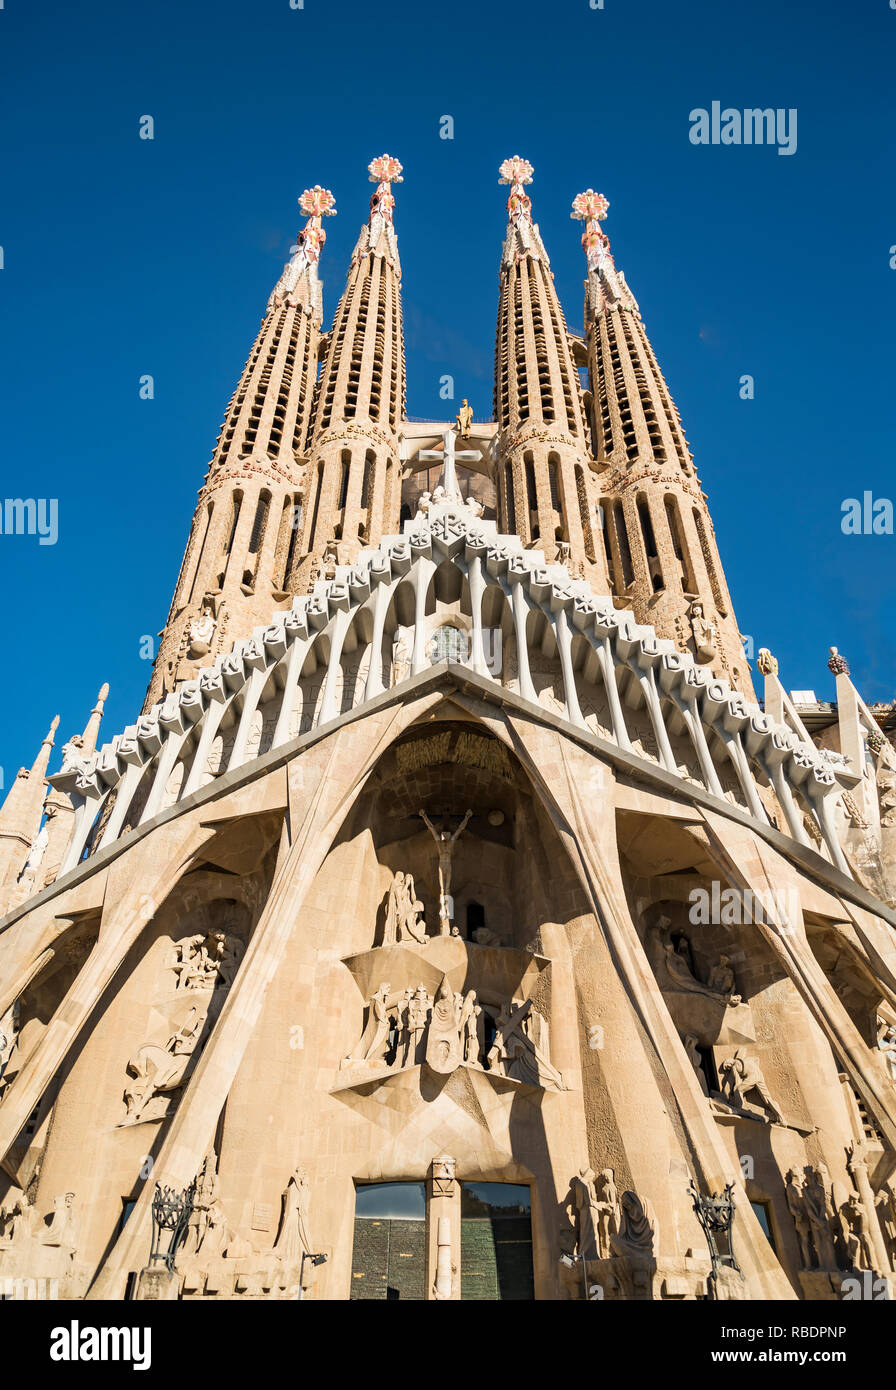 The Facade of the Sagrada Familia, the most iconic landmark in Barcelona Stock Photo